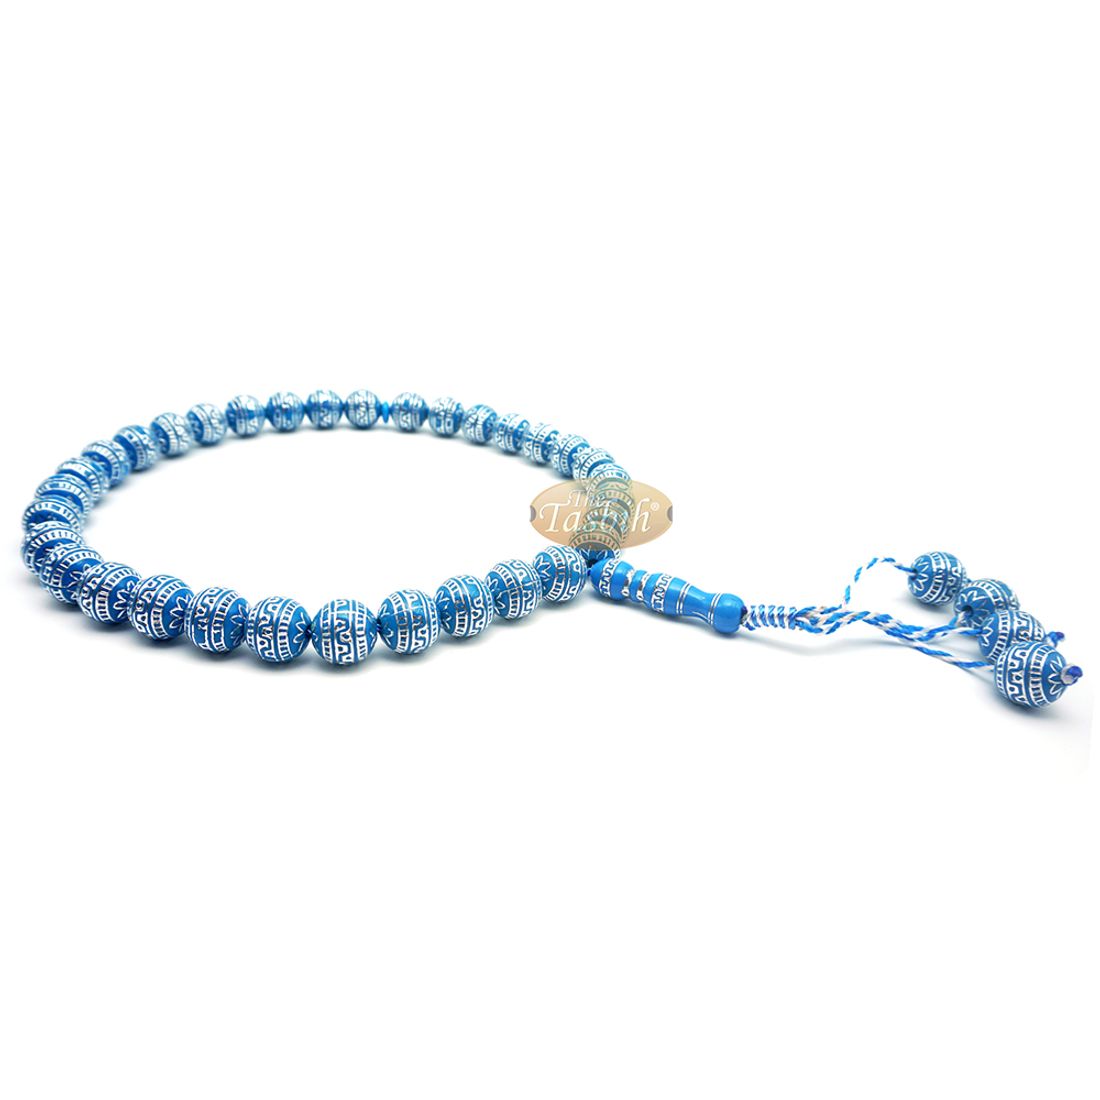 Large Sibha 13-mm Blue & Metallic Silver Meandros Plastic Resin 33-bead Muslim Tasbih Prayer Beads